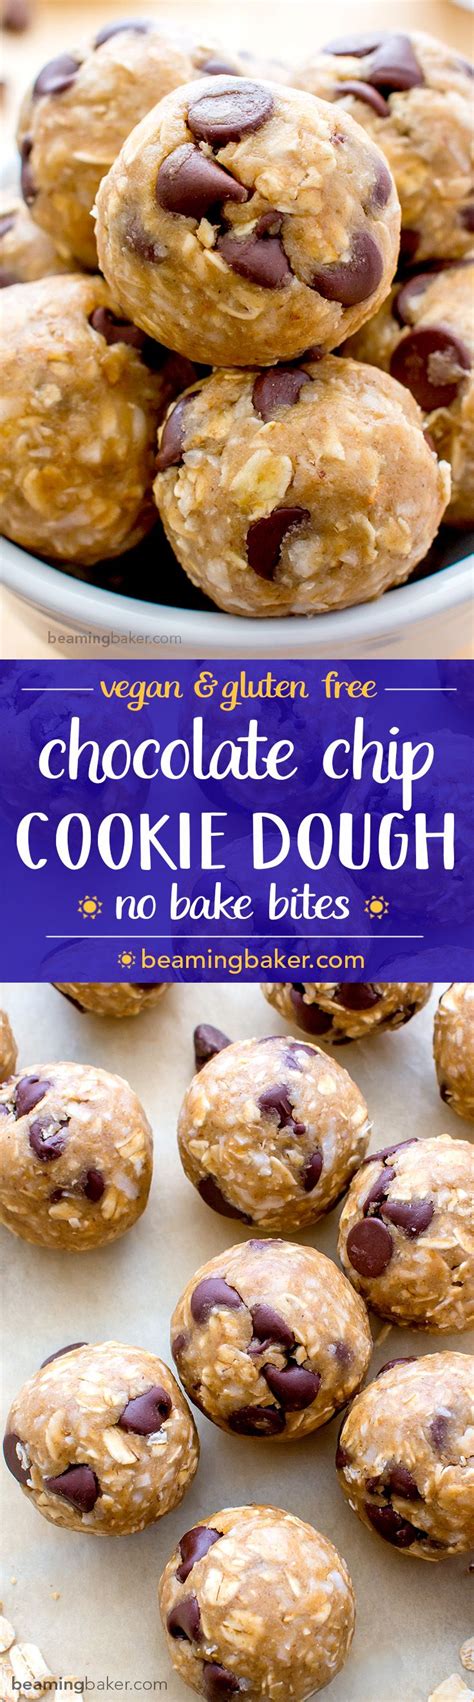 Chocolate Chip Cookie Dough Bites Vgf An Easy Guilt Free Recipe Fo Gluten Free Chocolate